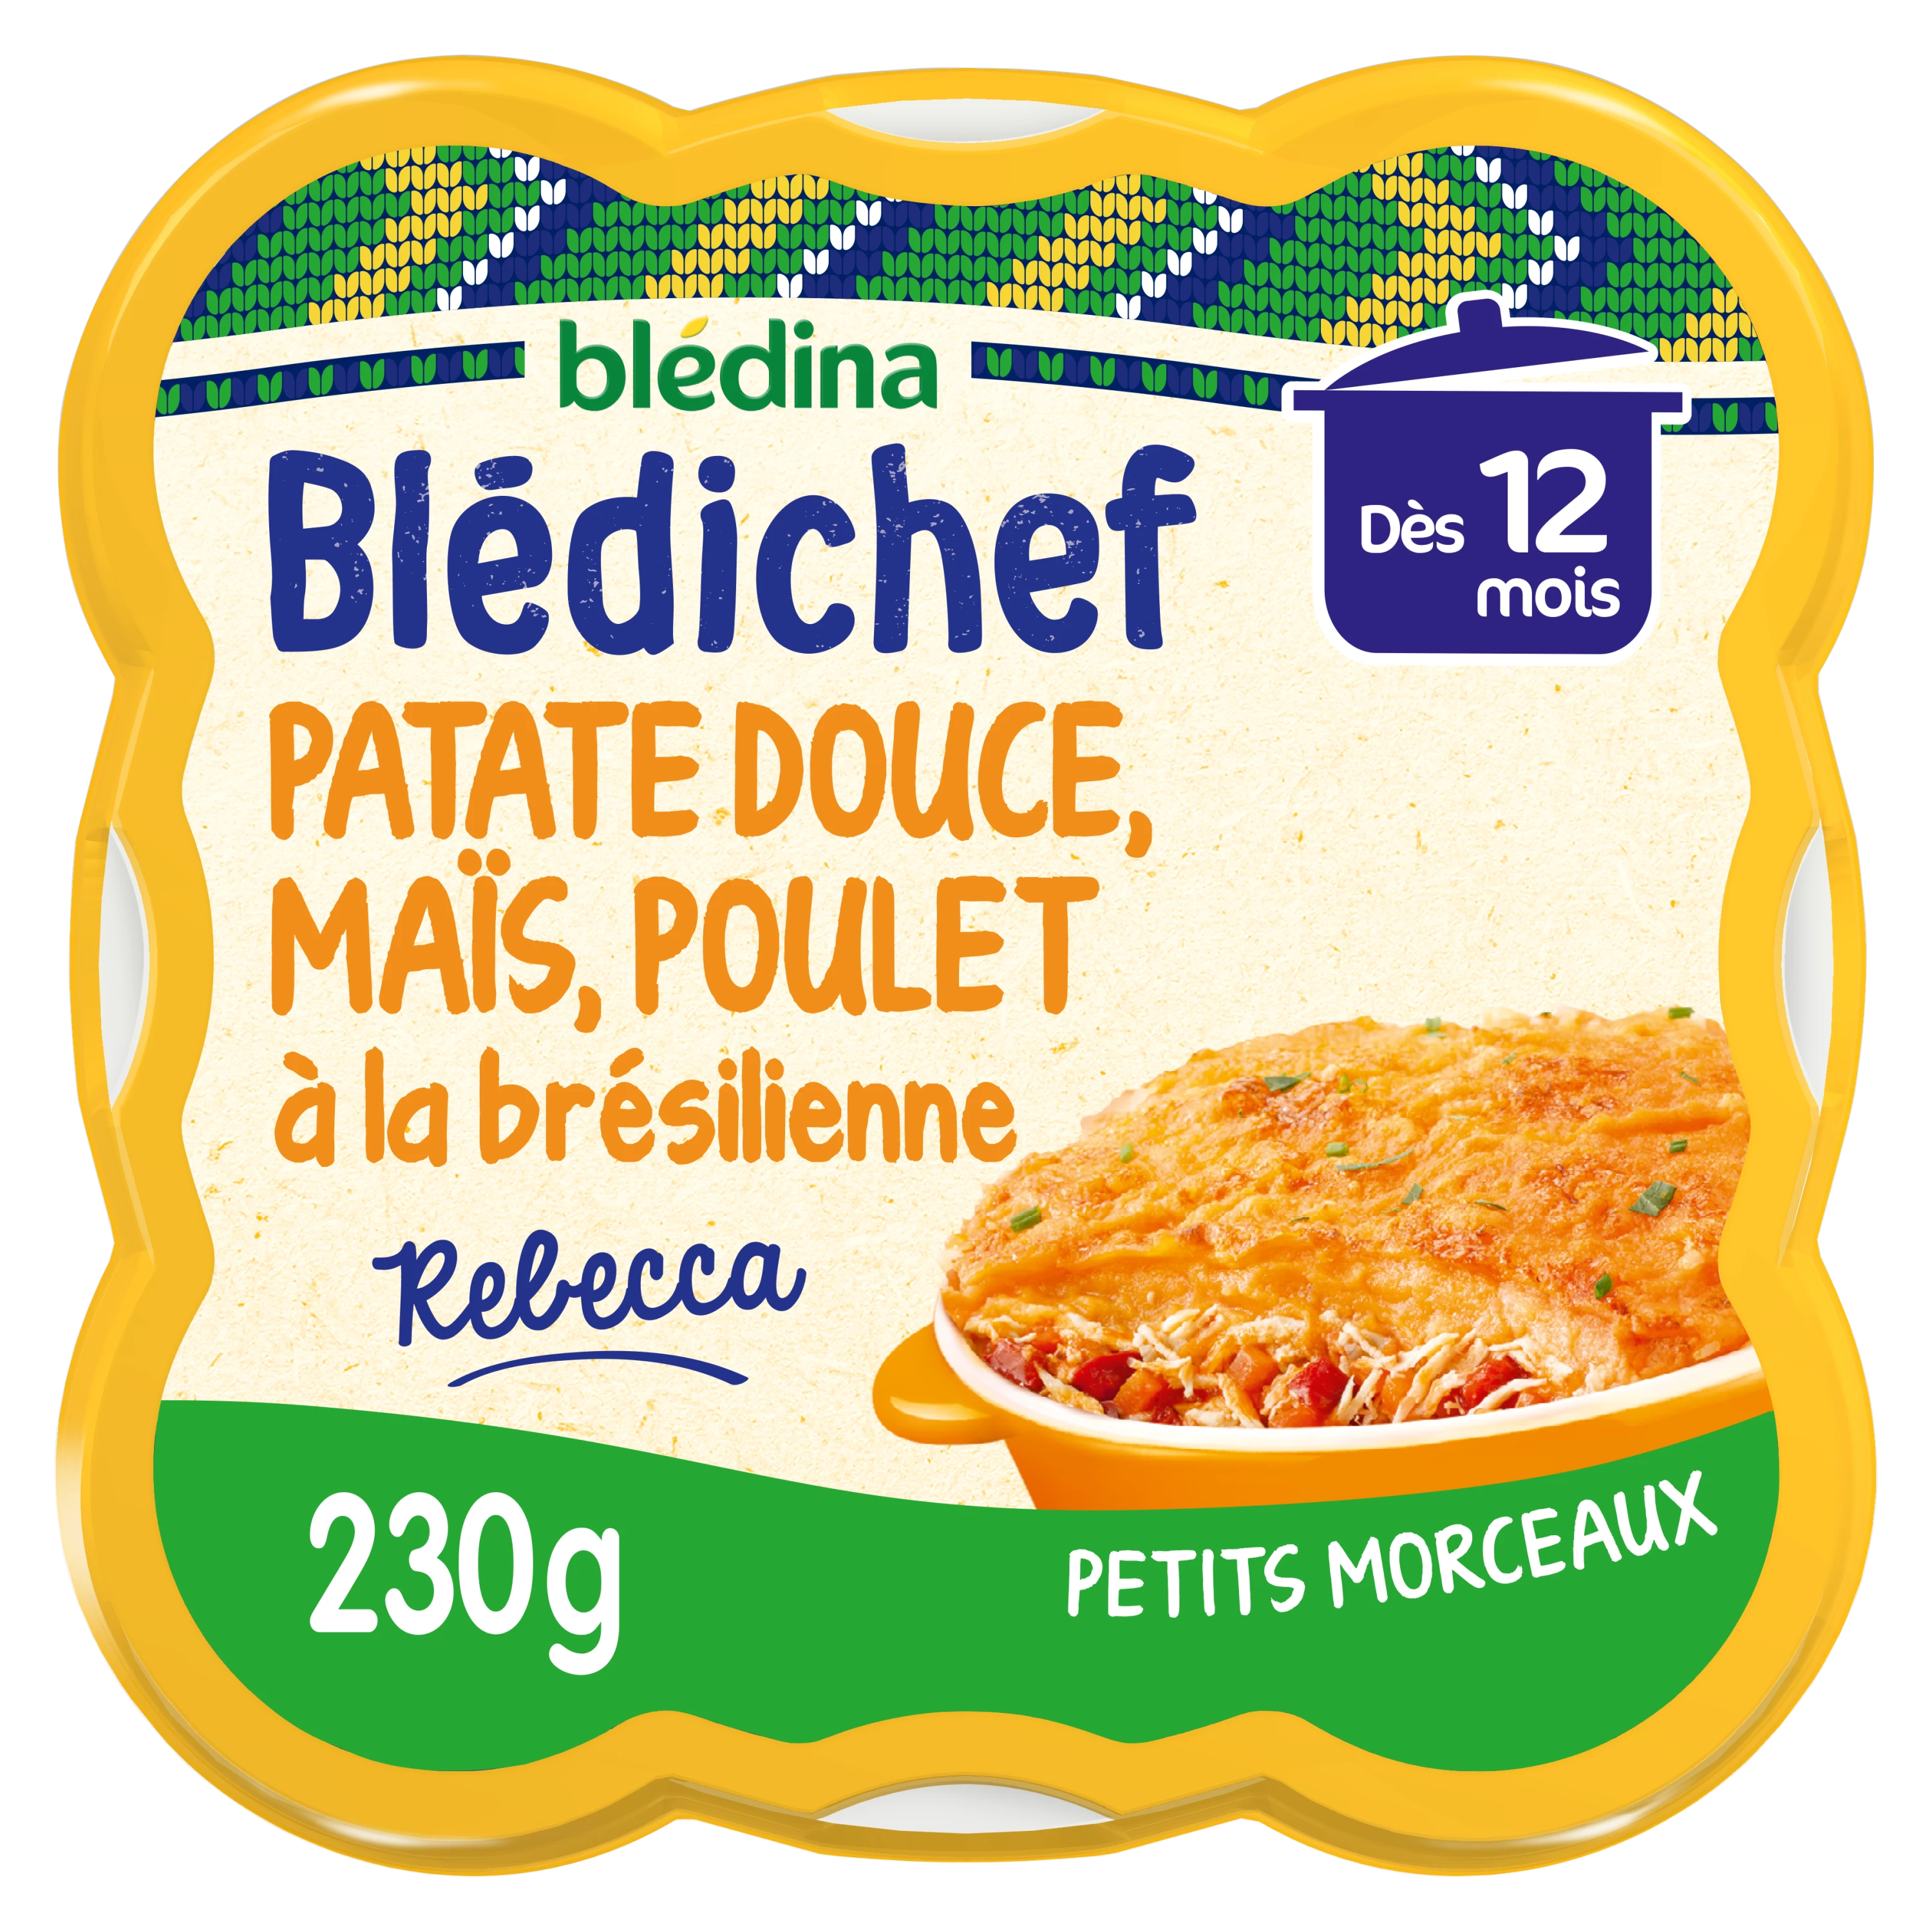 Blédichef Baby dish from 12 months sweet potato puree corn and chicken 230g - BLEDINA